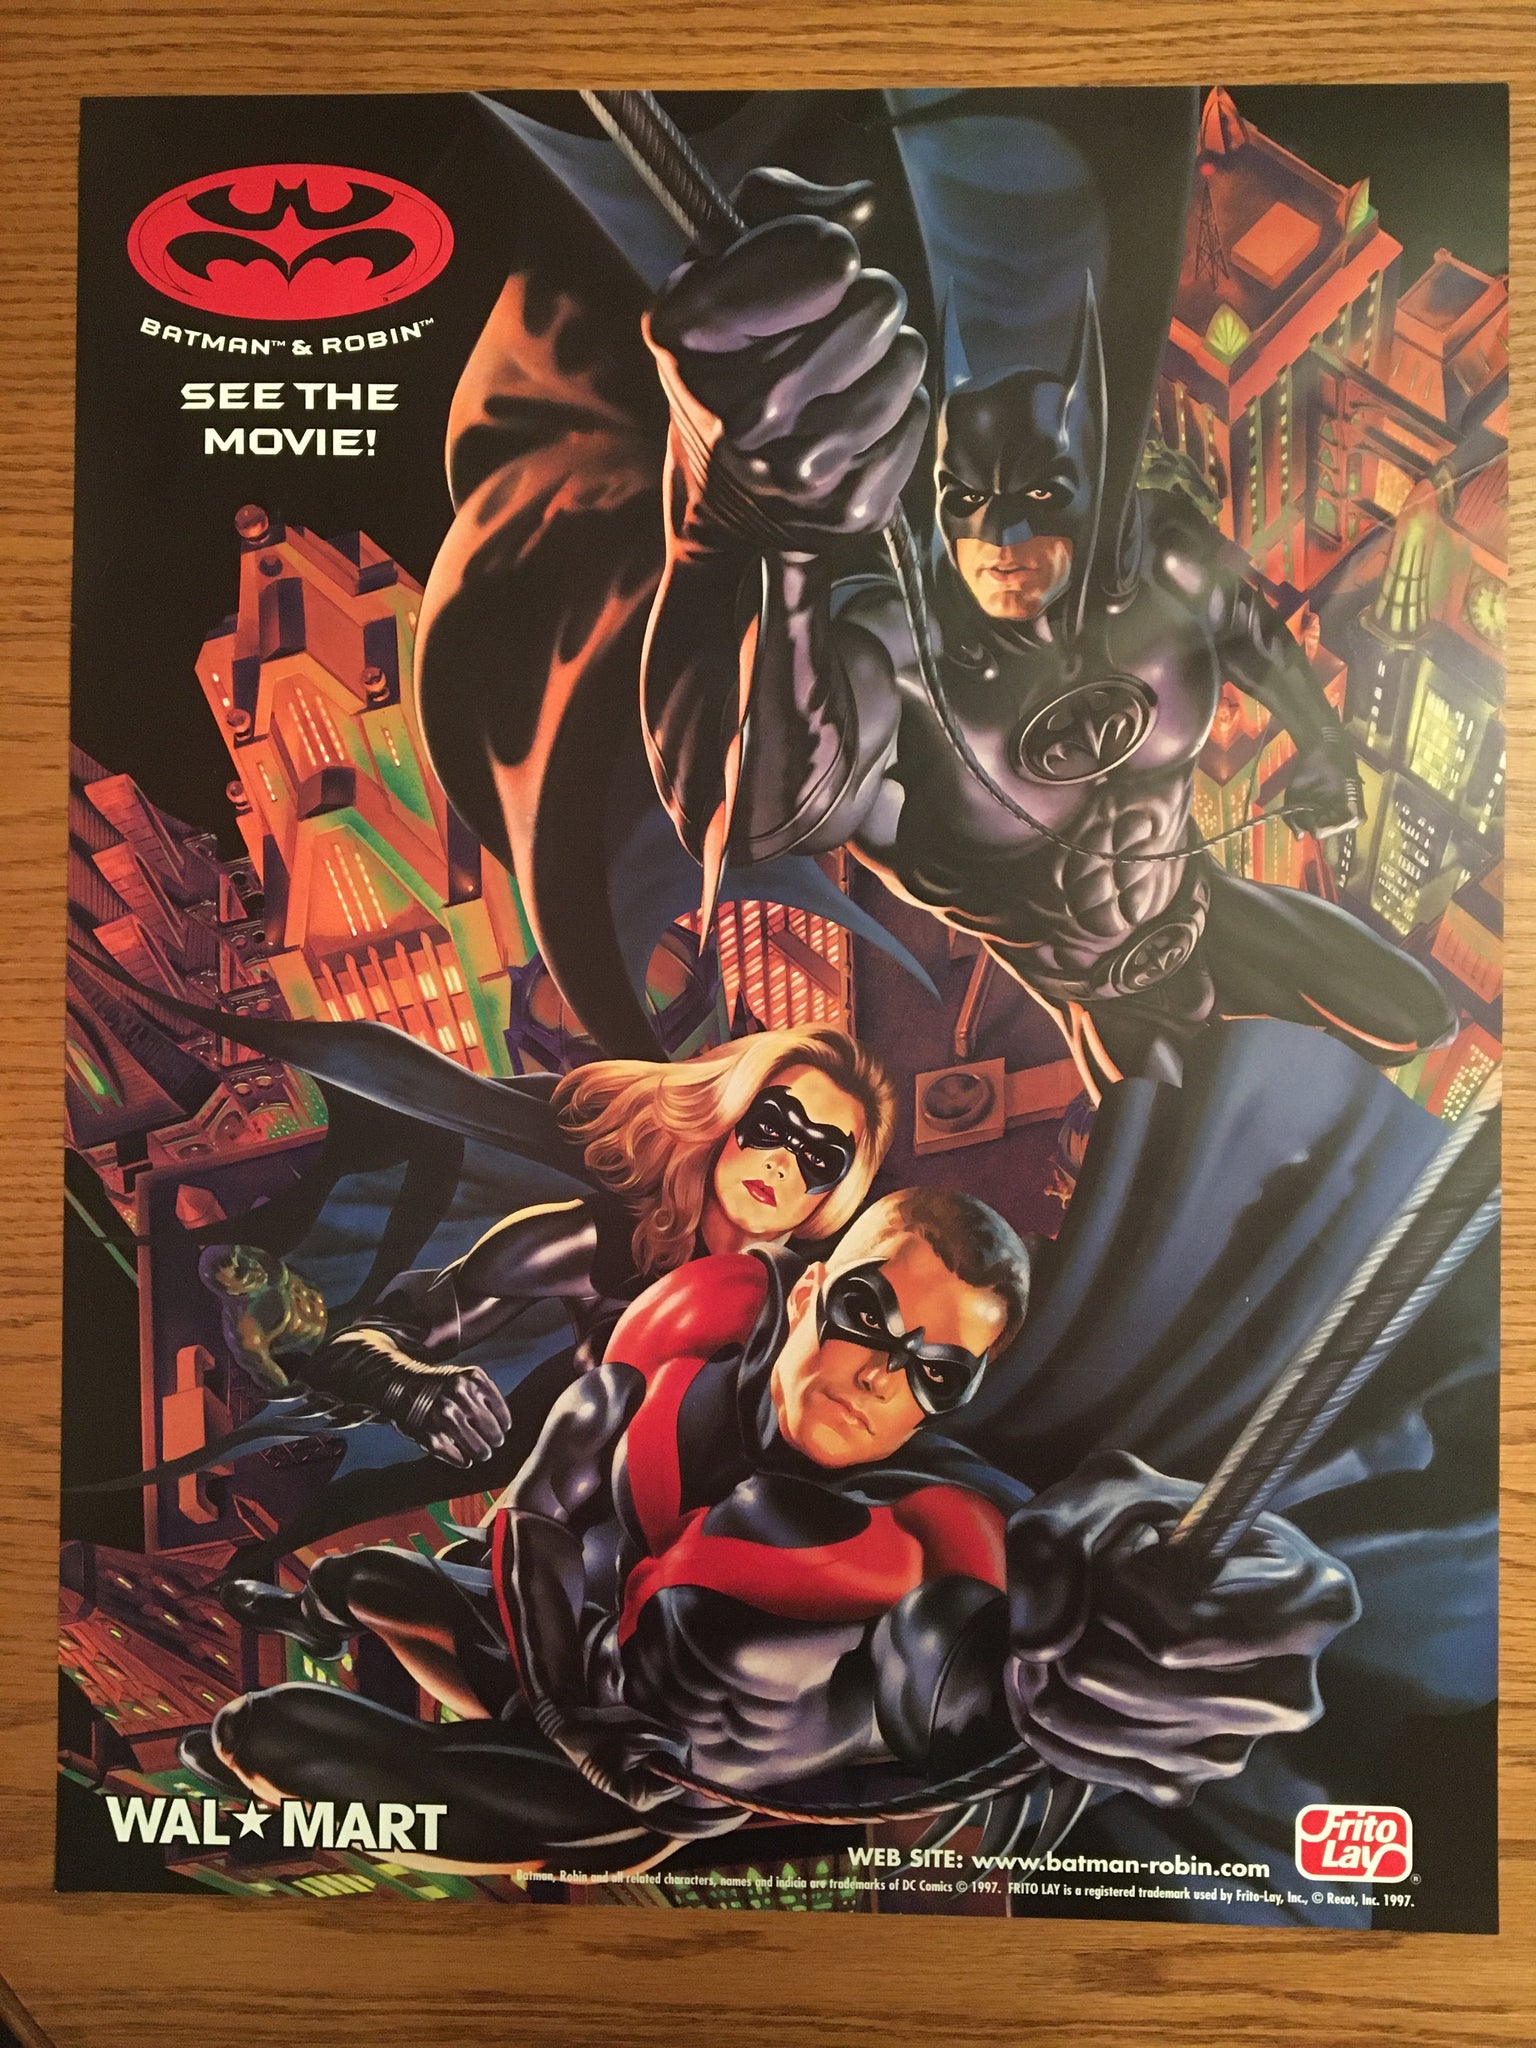 Batman and Robin Hero's poster